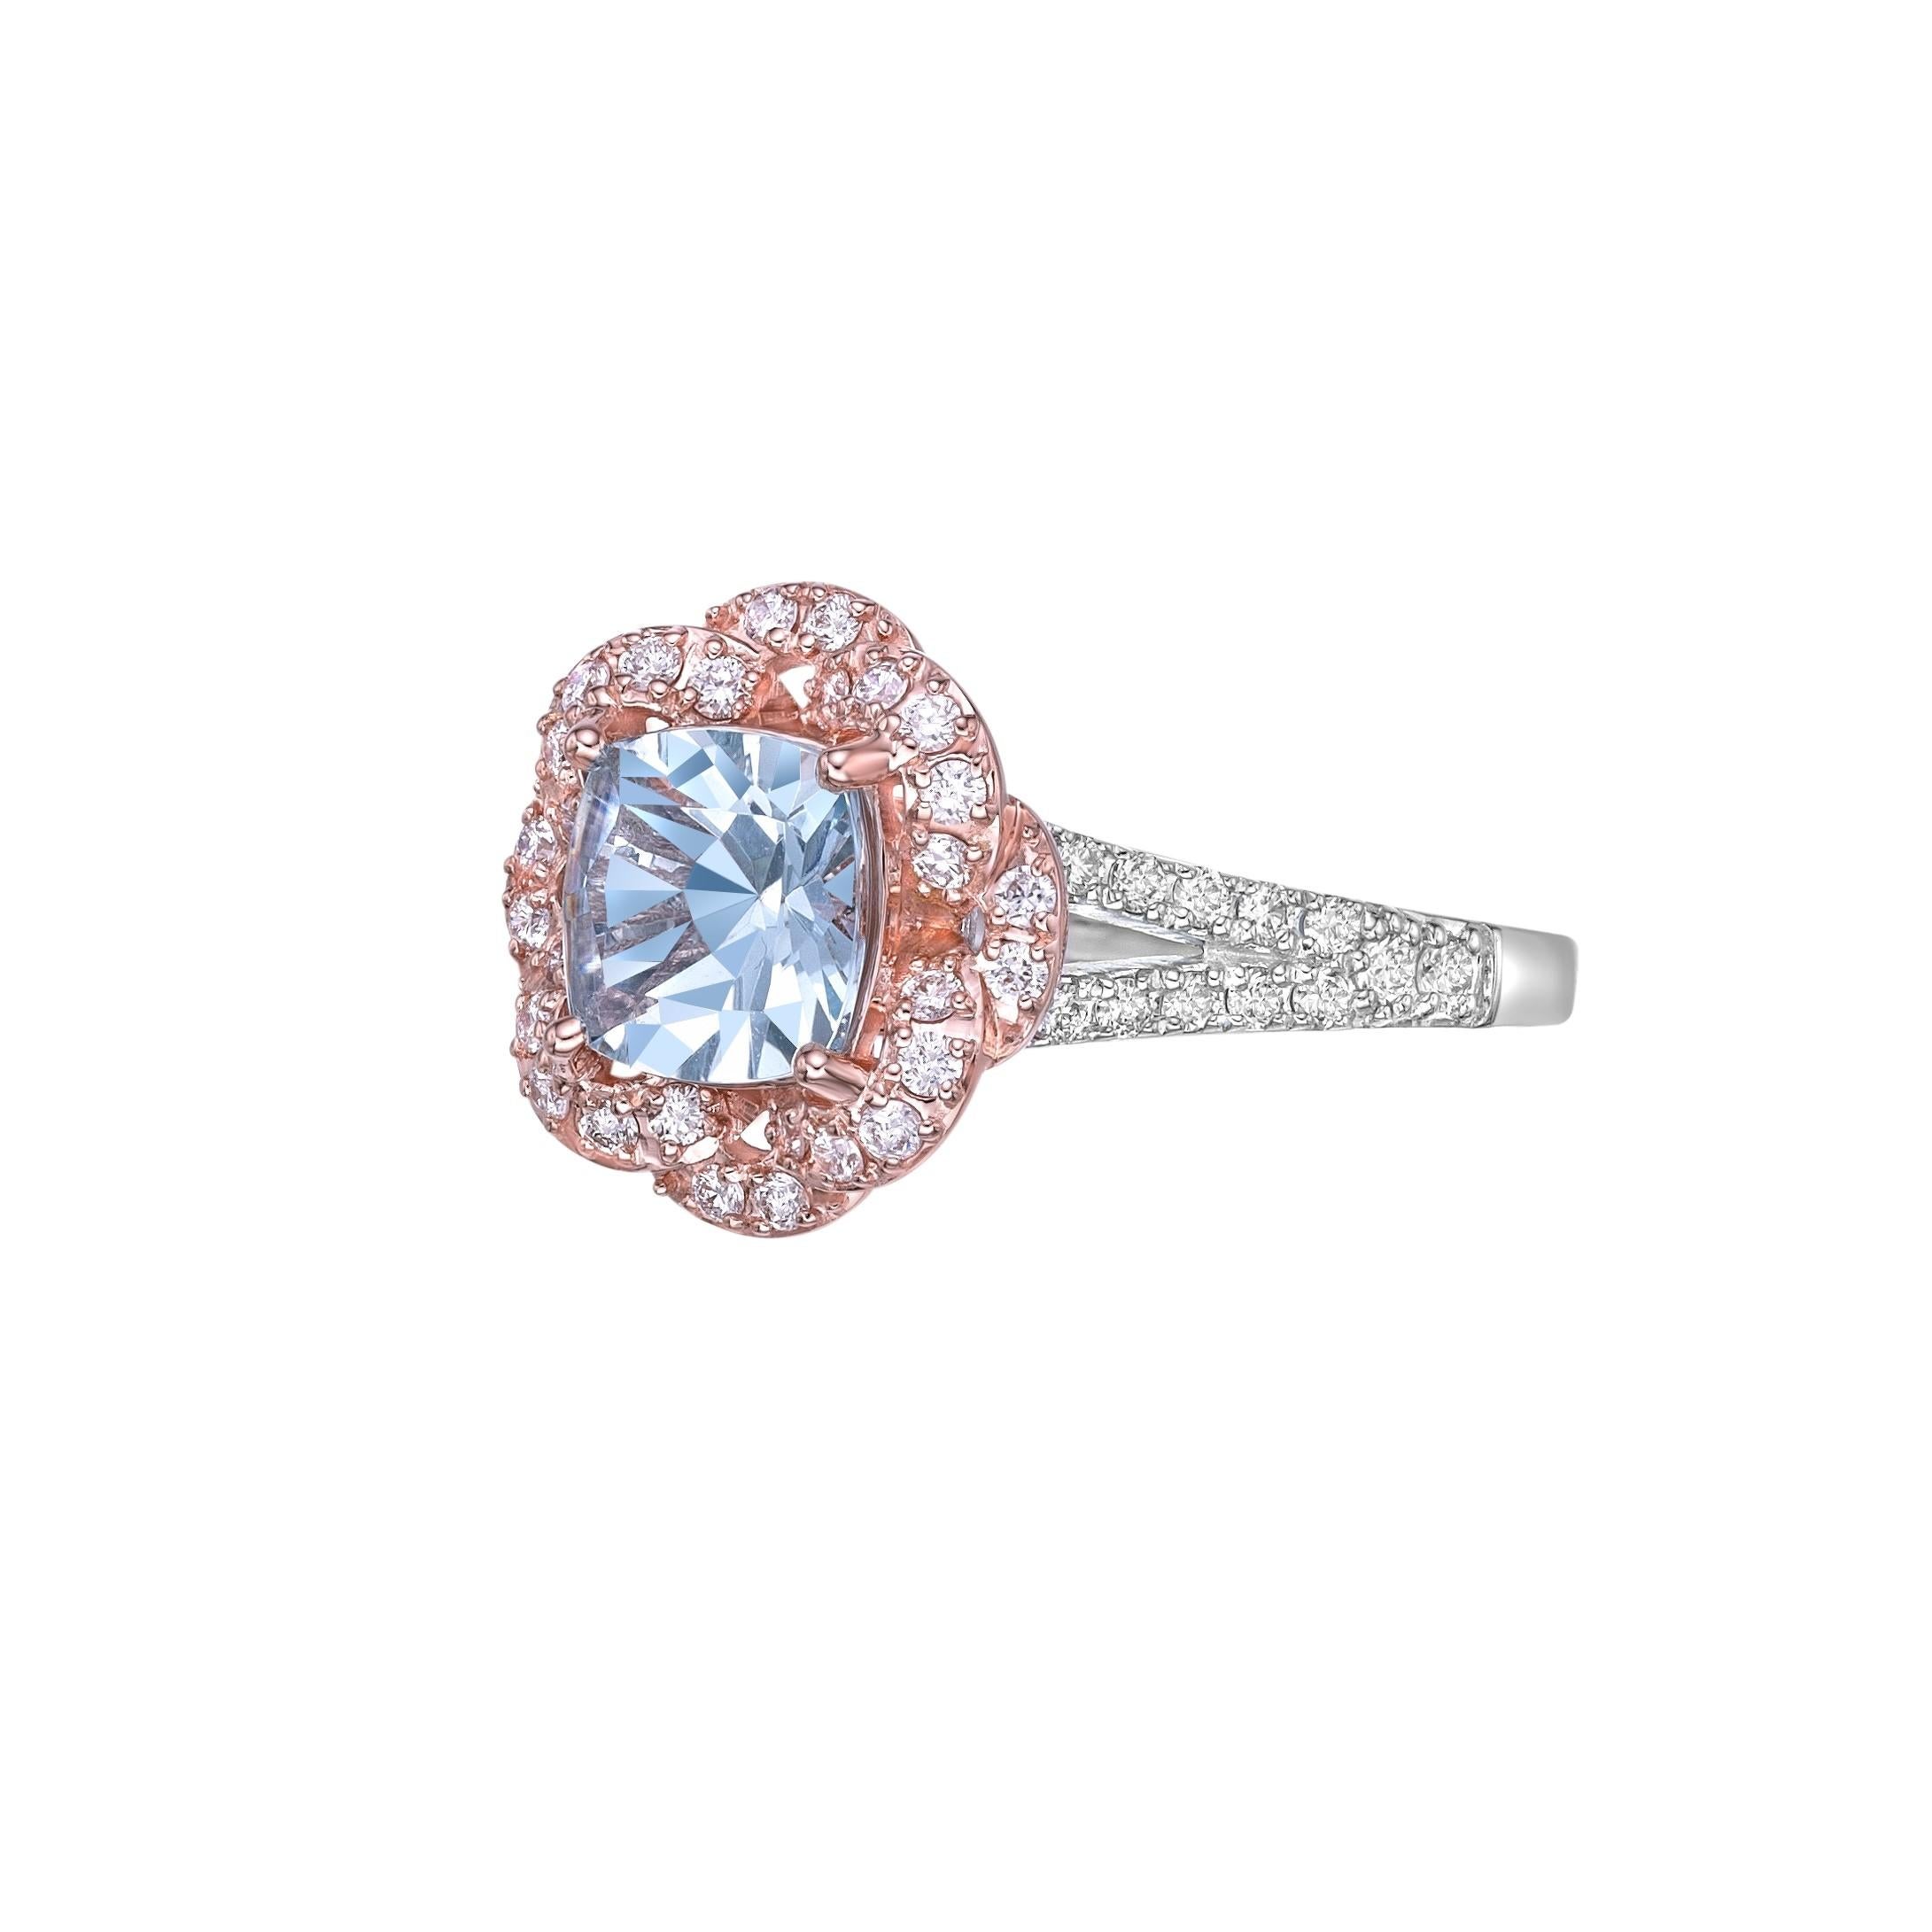 Cushion Cut 1.16 Carat Aquamarine Fancy Ring in 18Karat White Rose Gold with Diamond.   For Sale